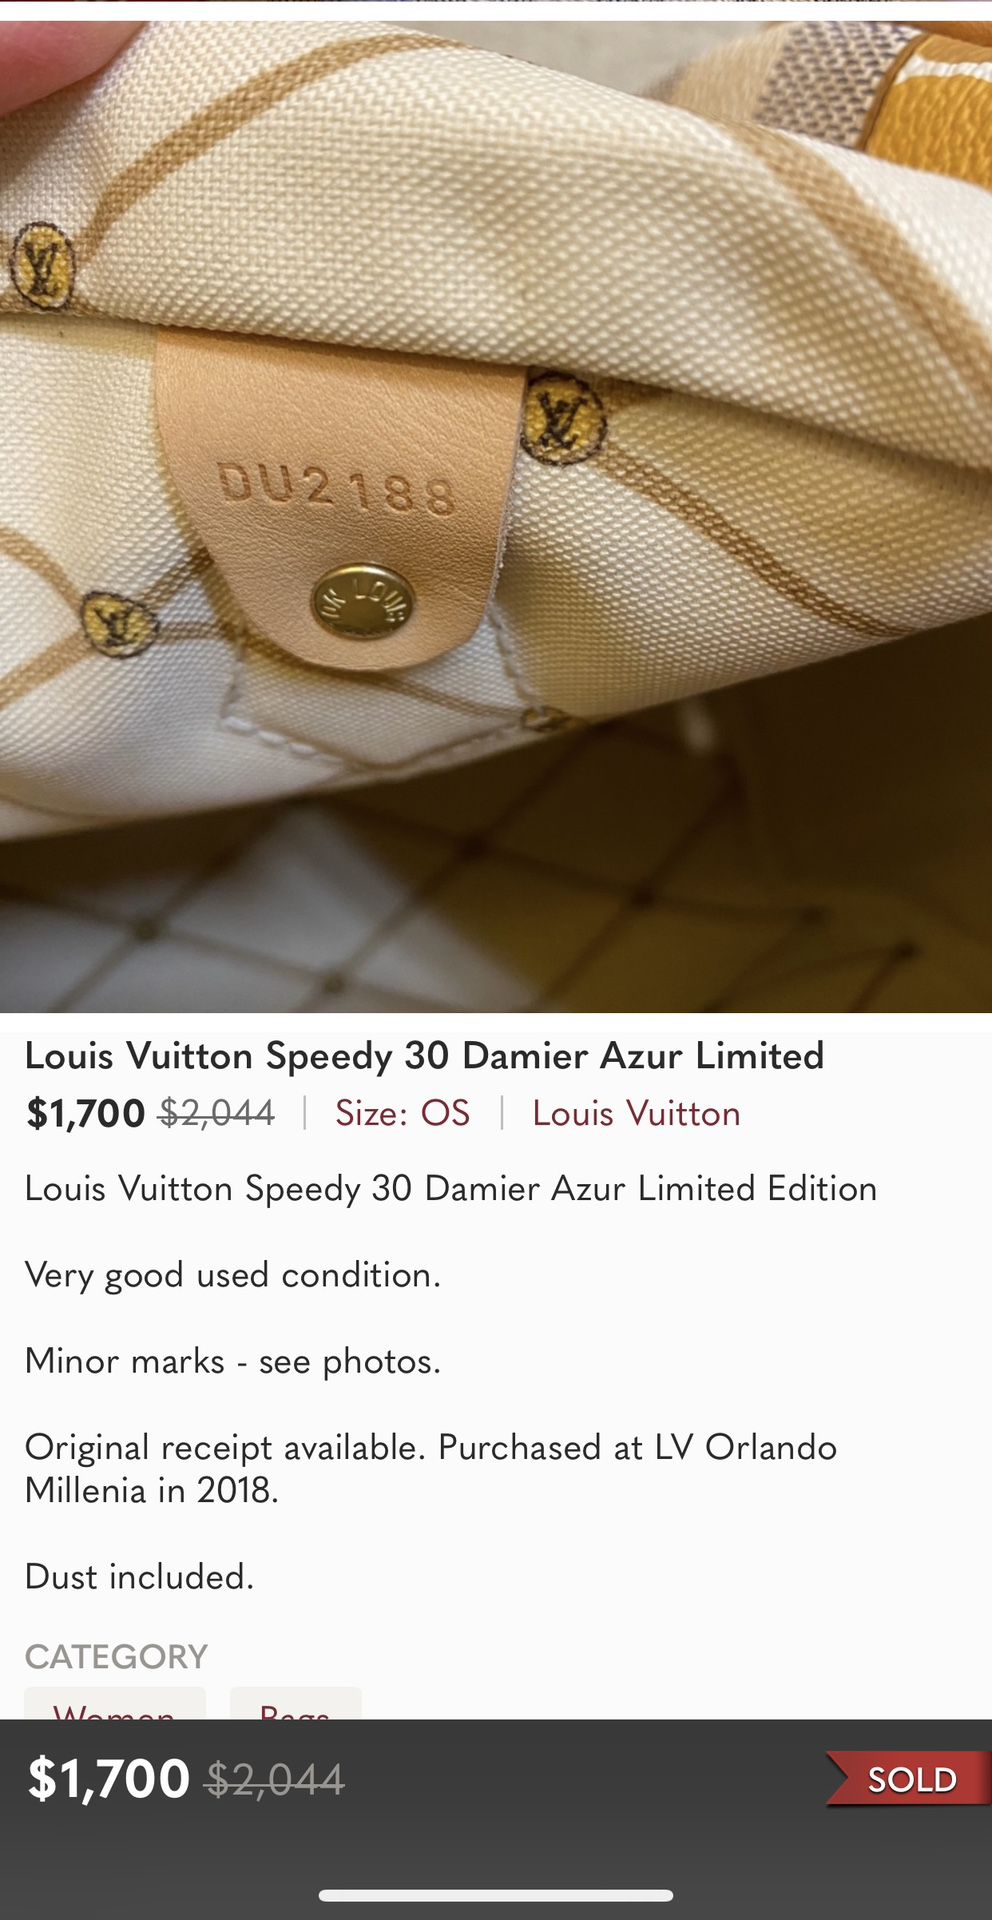 Authentic Louis Vuitton speedy 30